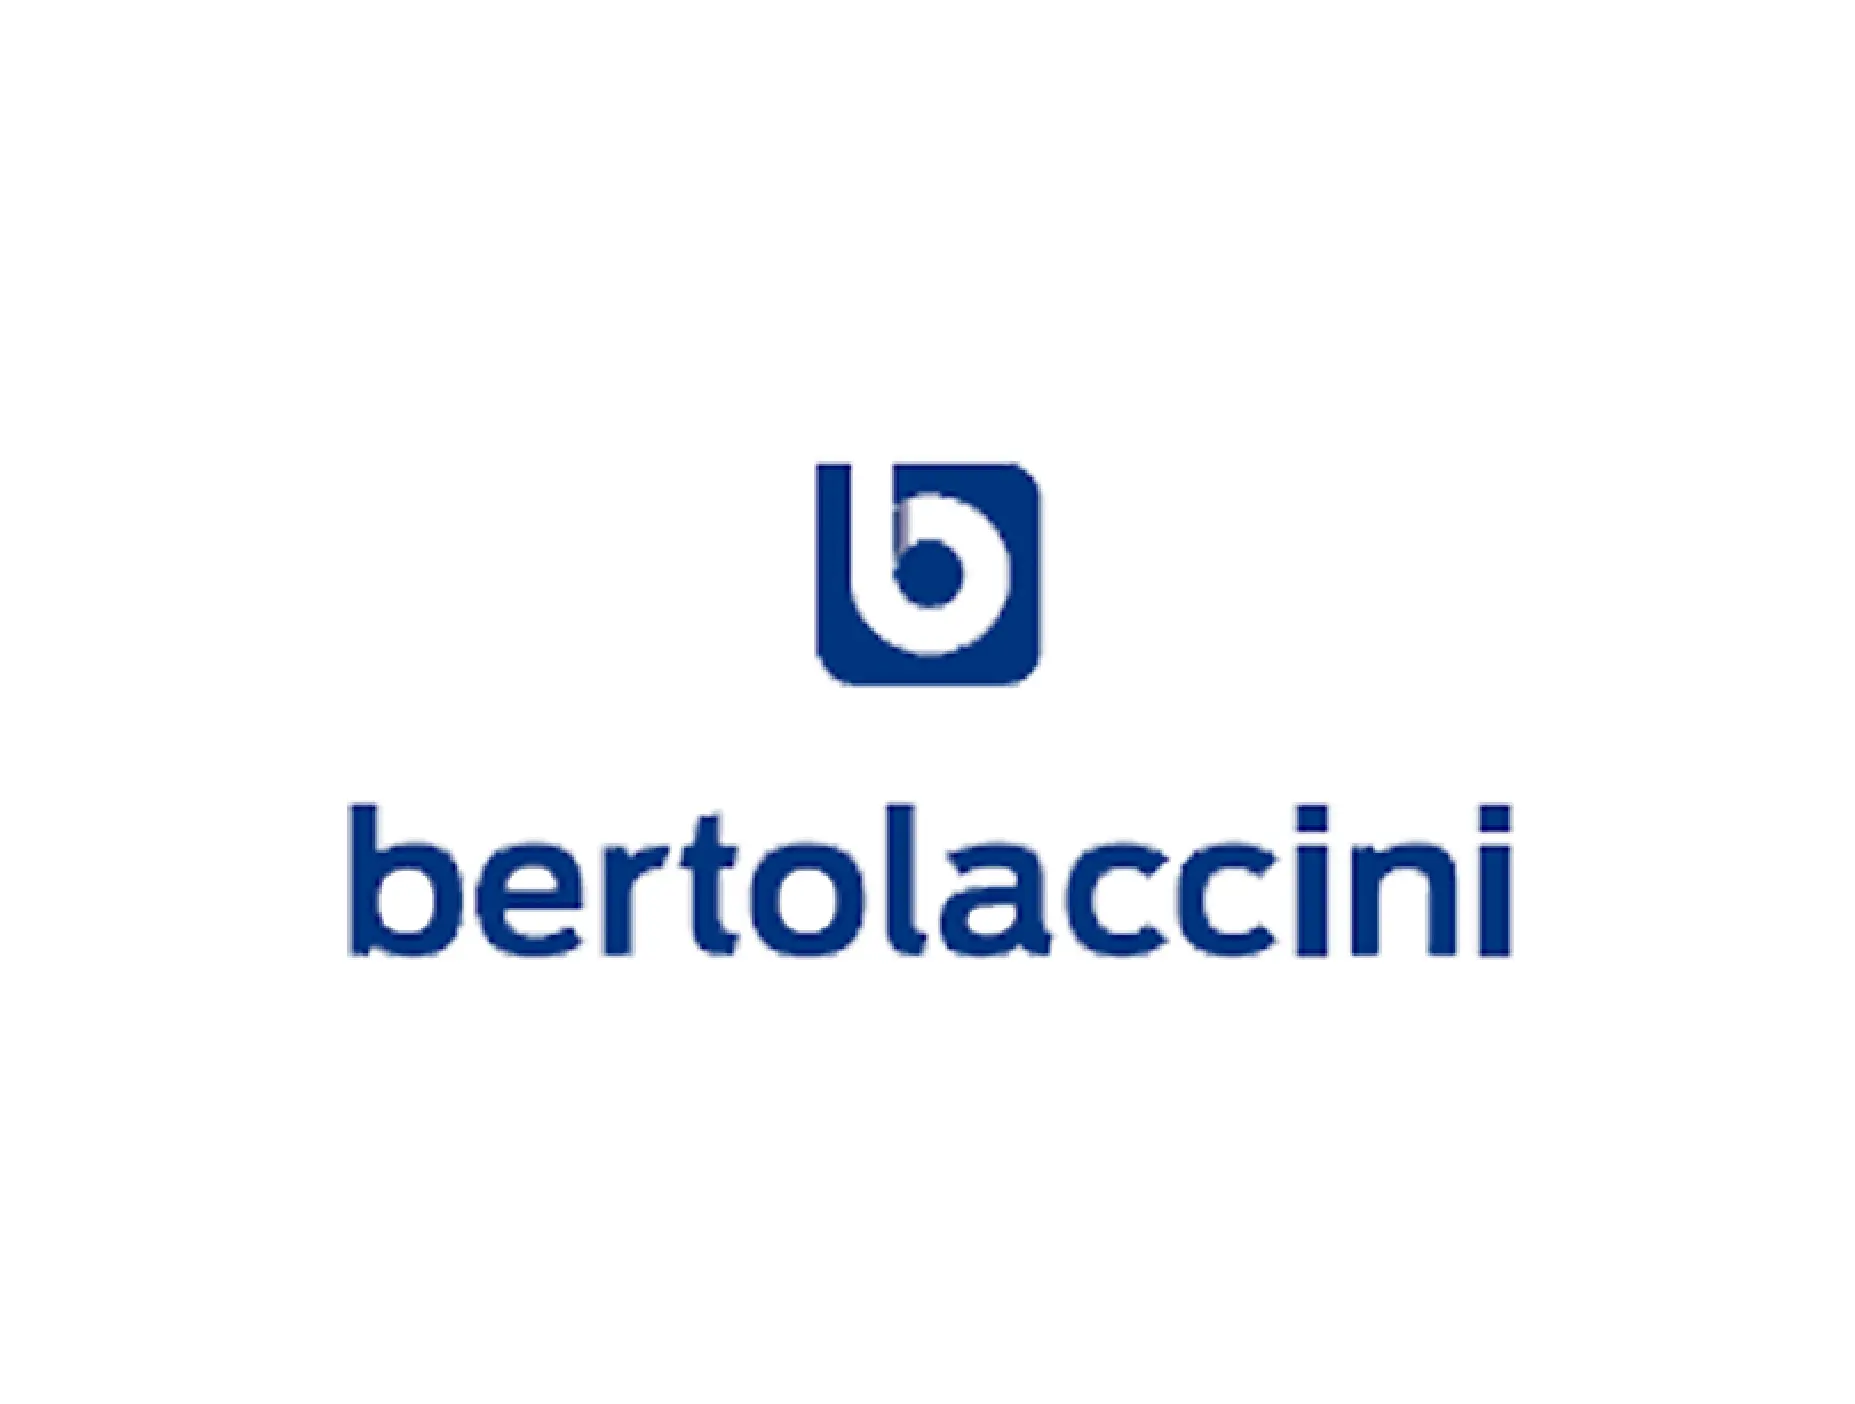 Bertolaccini